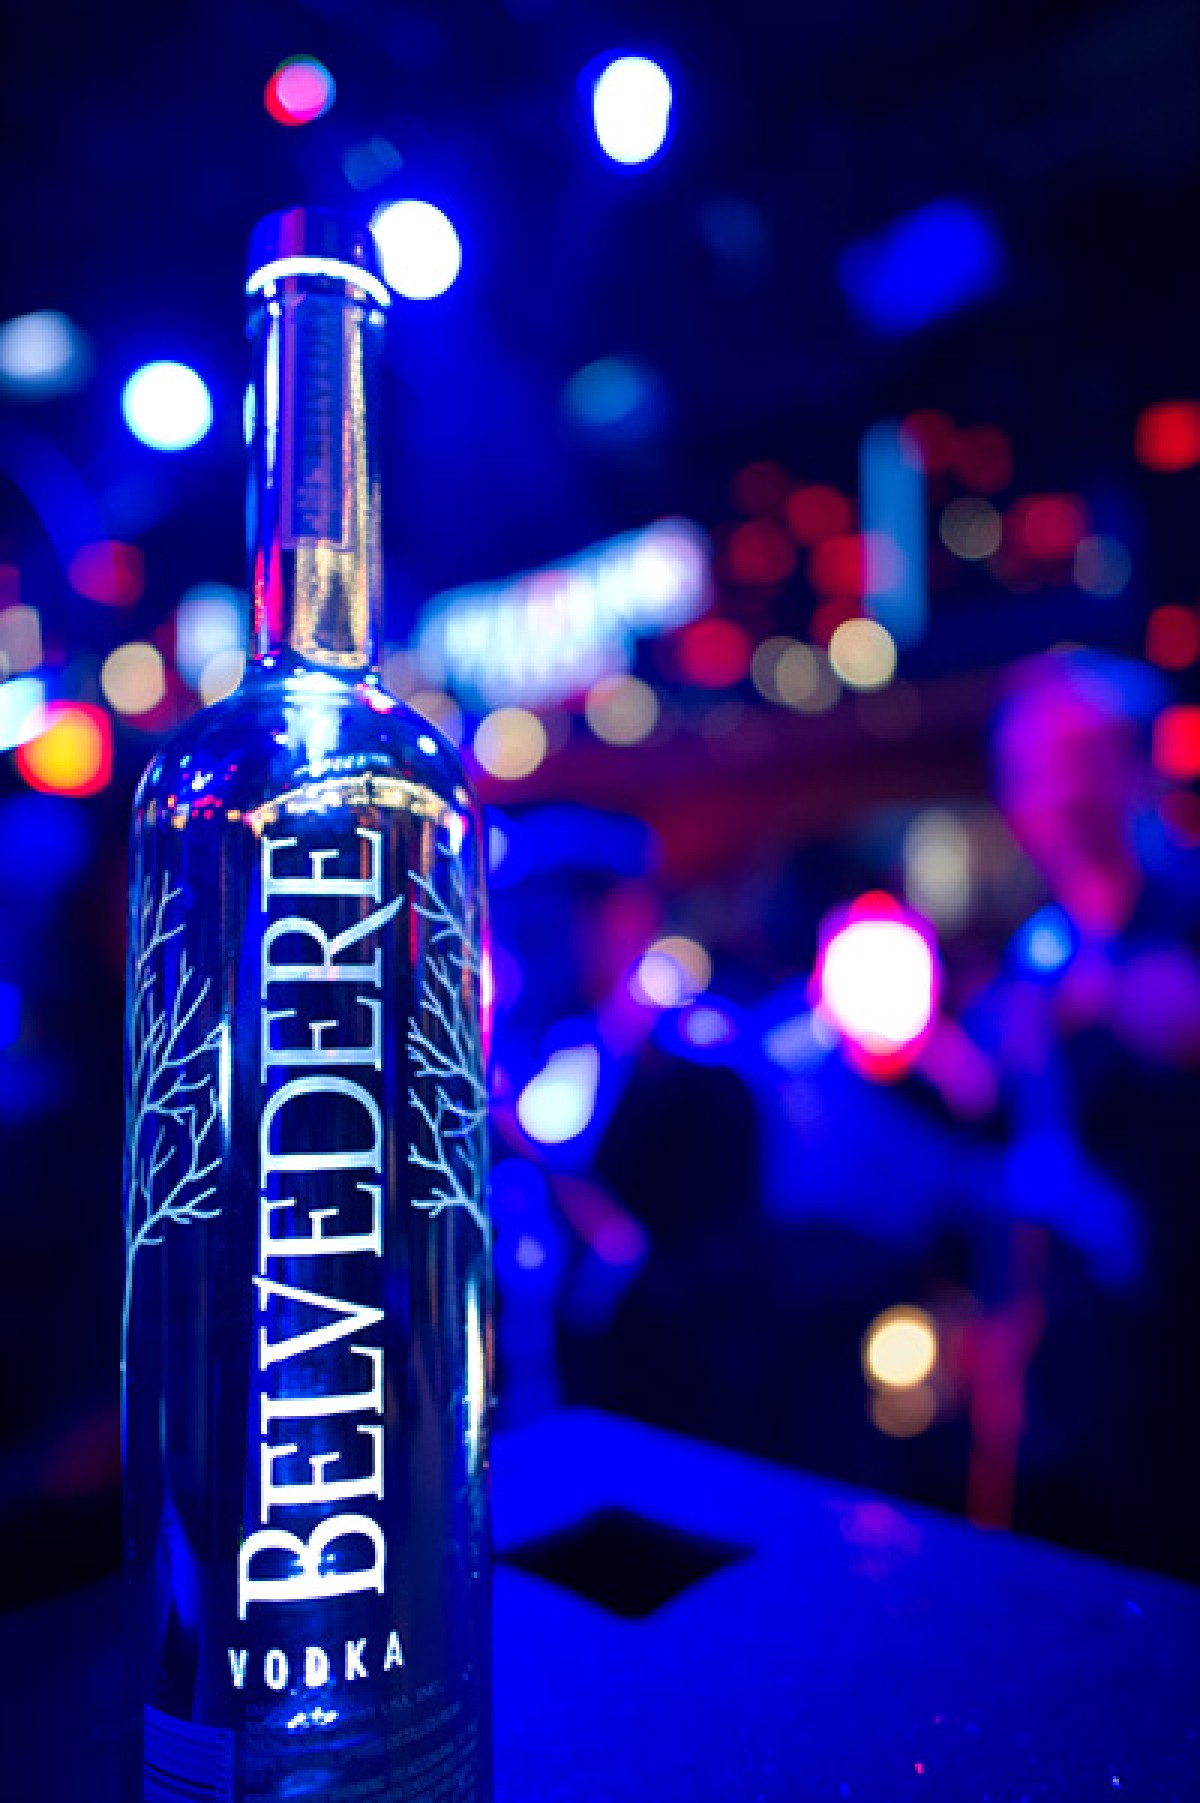 belvedere vodka logo